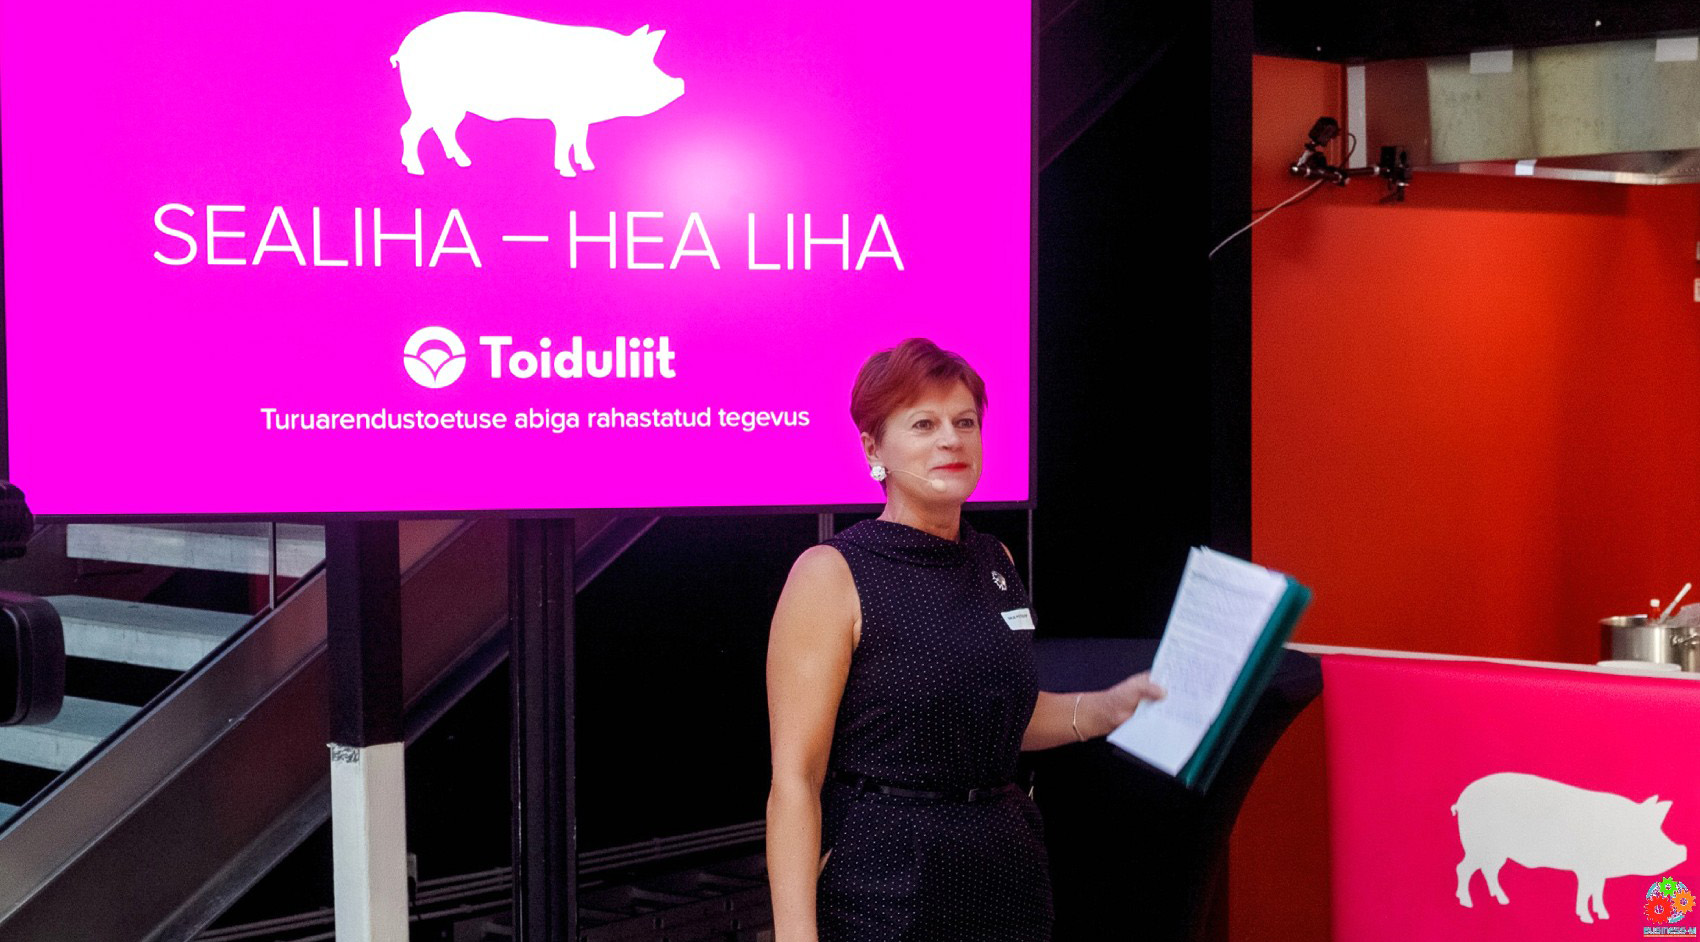 Toiduliit проводит в Эстонии кампанию «Sealiha – hea liha»